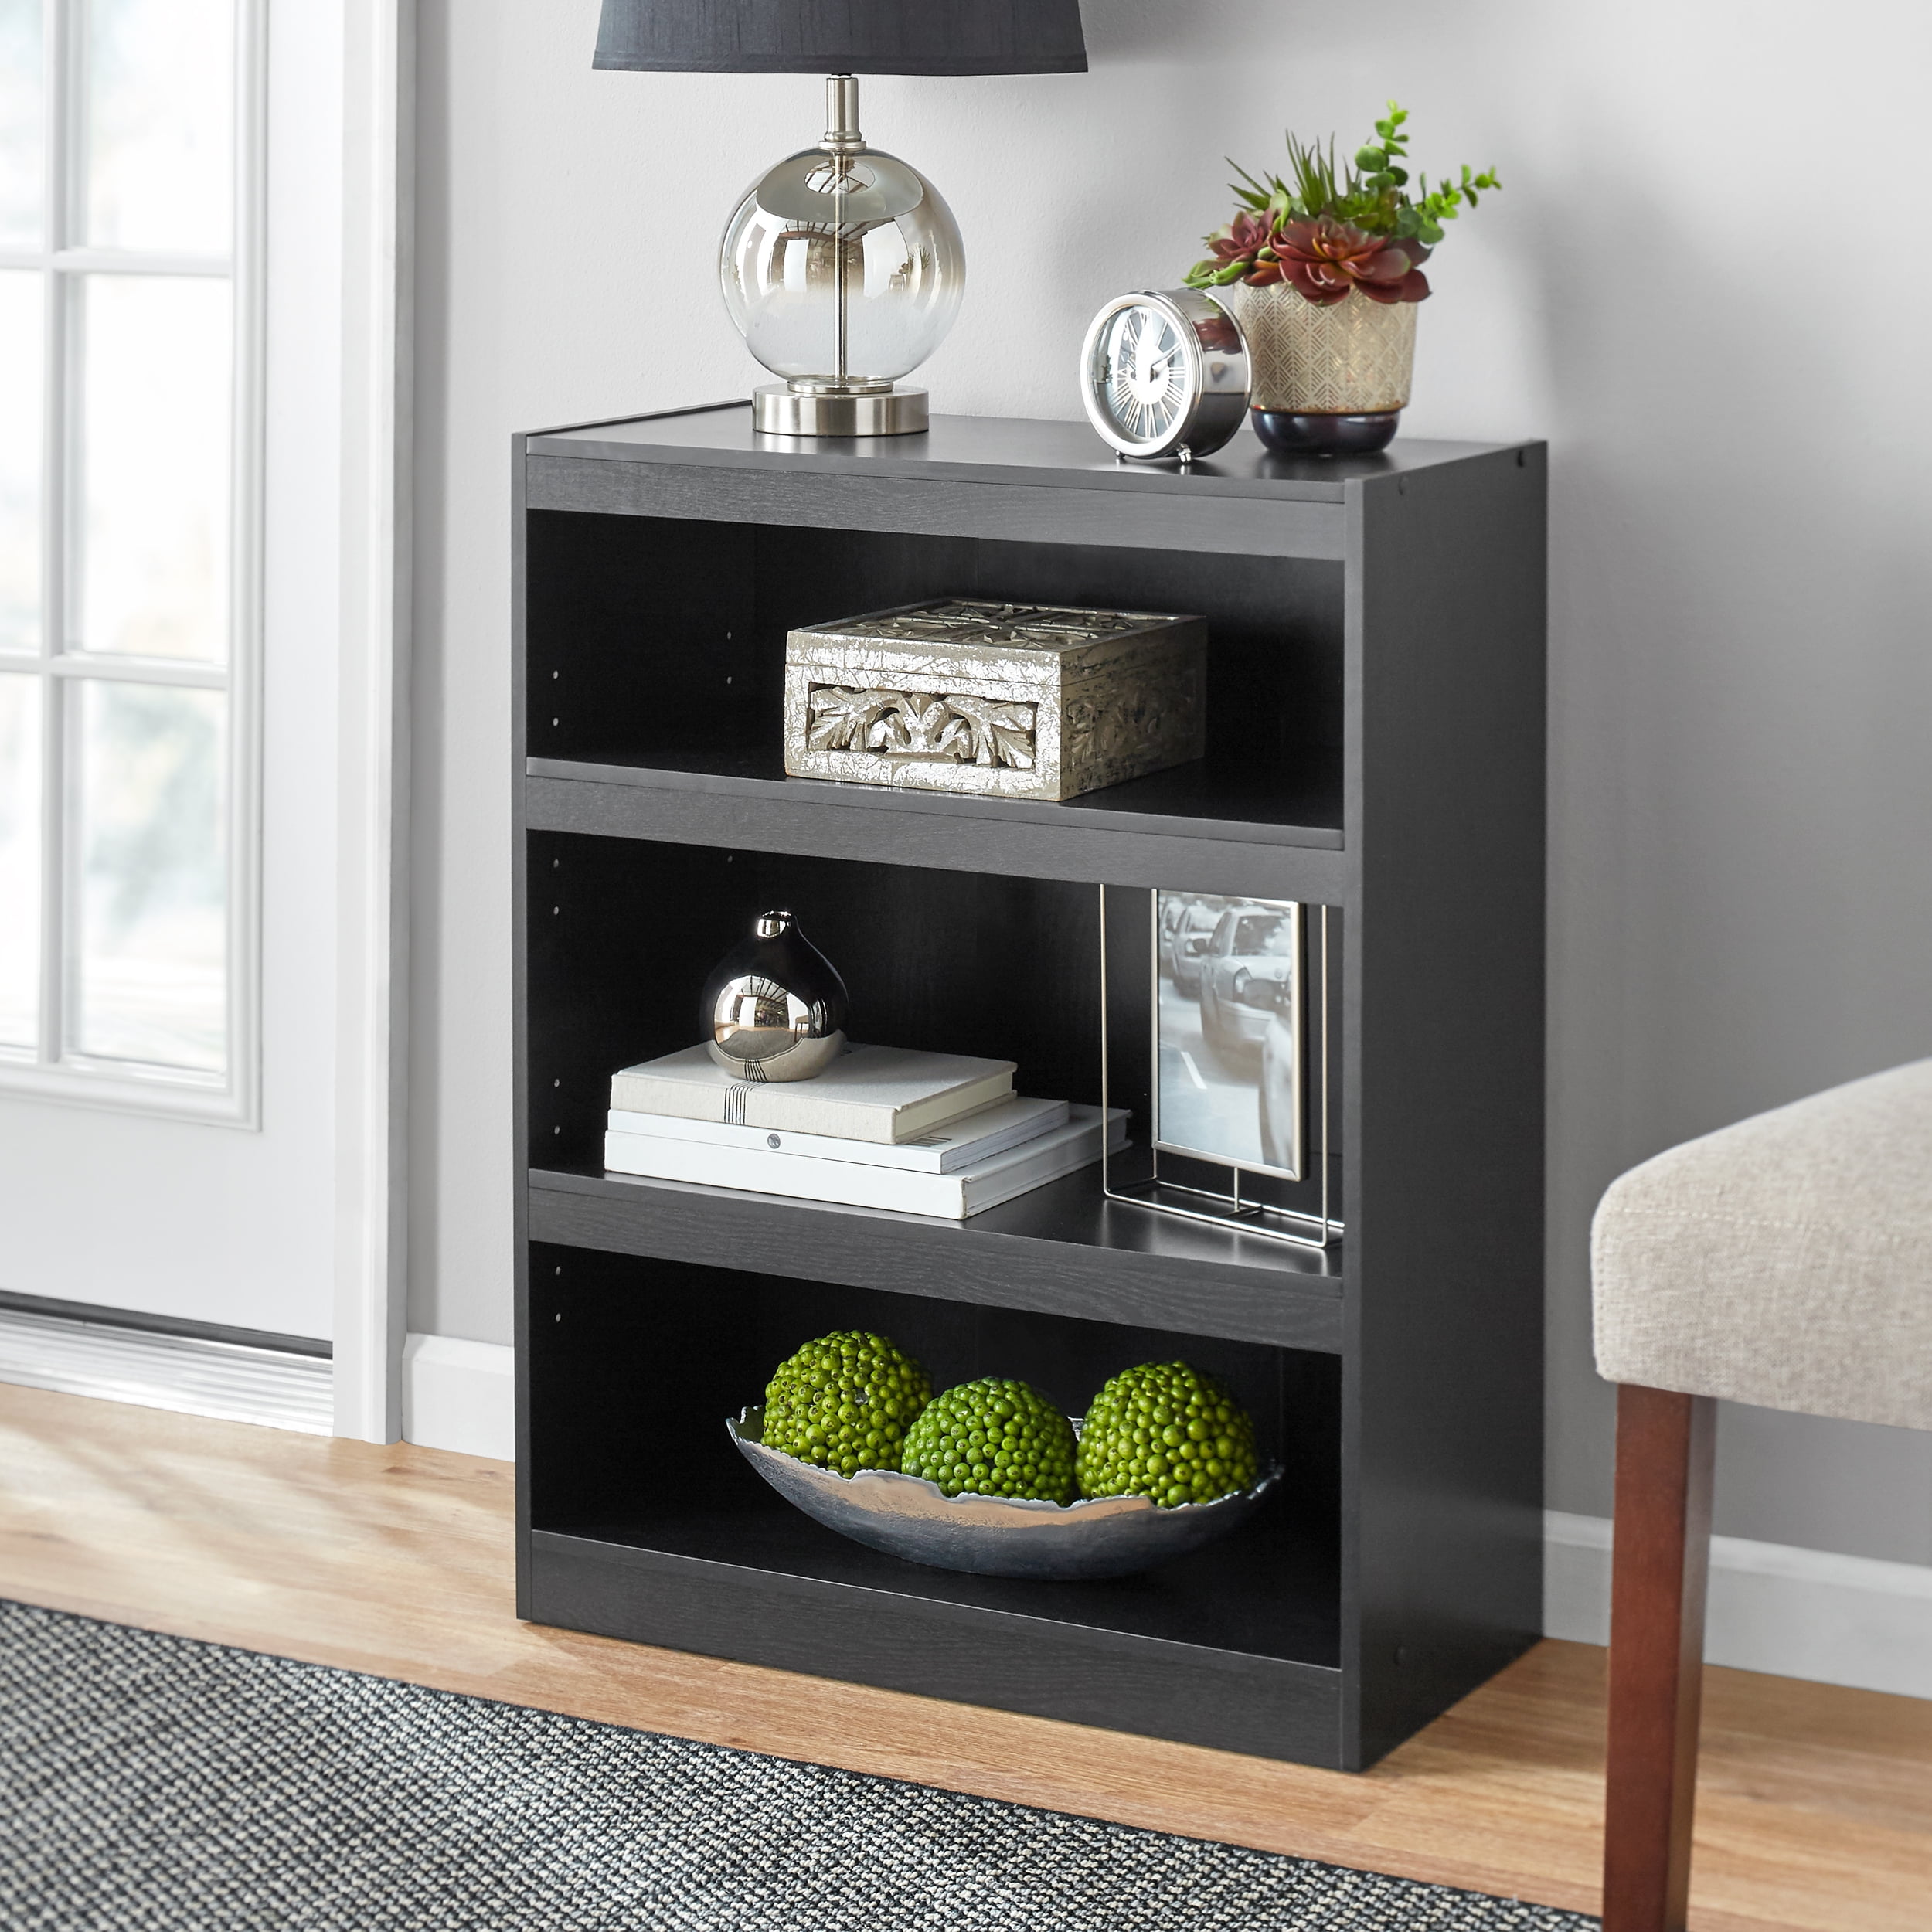 Mainstay. 3-Shelf Bookcase Black + Freebie, 3-Shelf 1 Fixed Shelf 2 Adjustable Shelves Bookcase, Wide Bookshelf Storage Wood Furniture